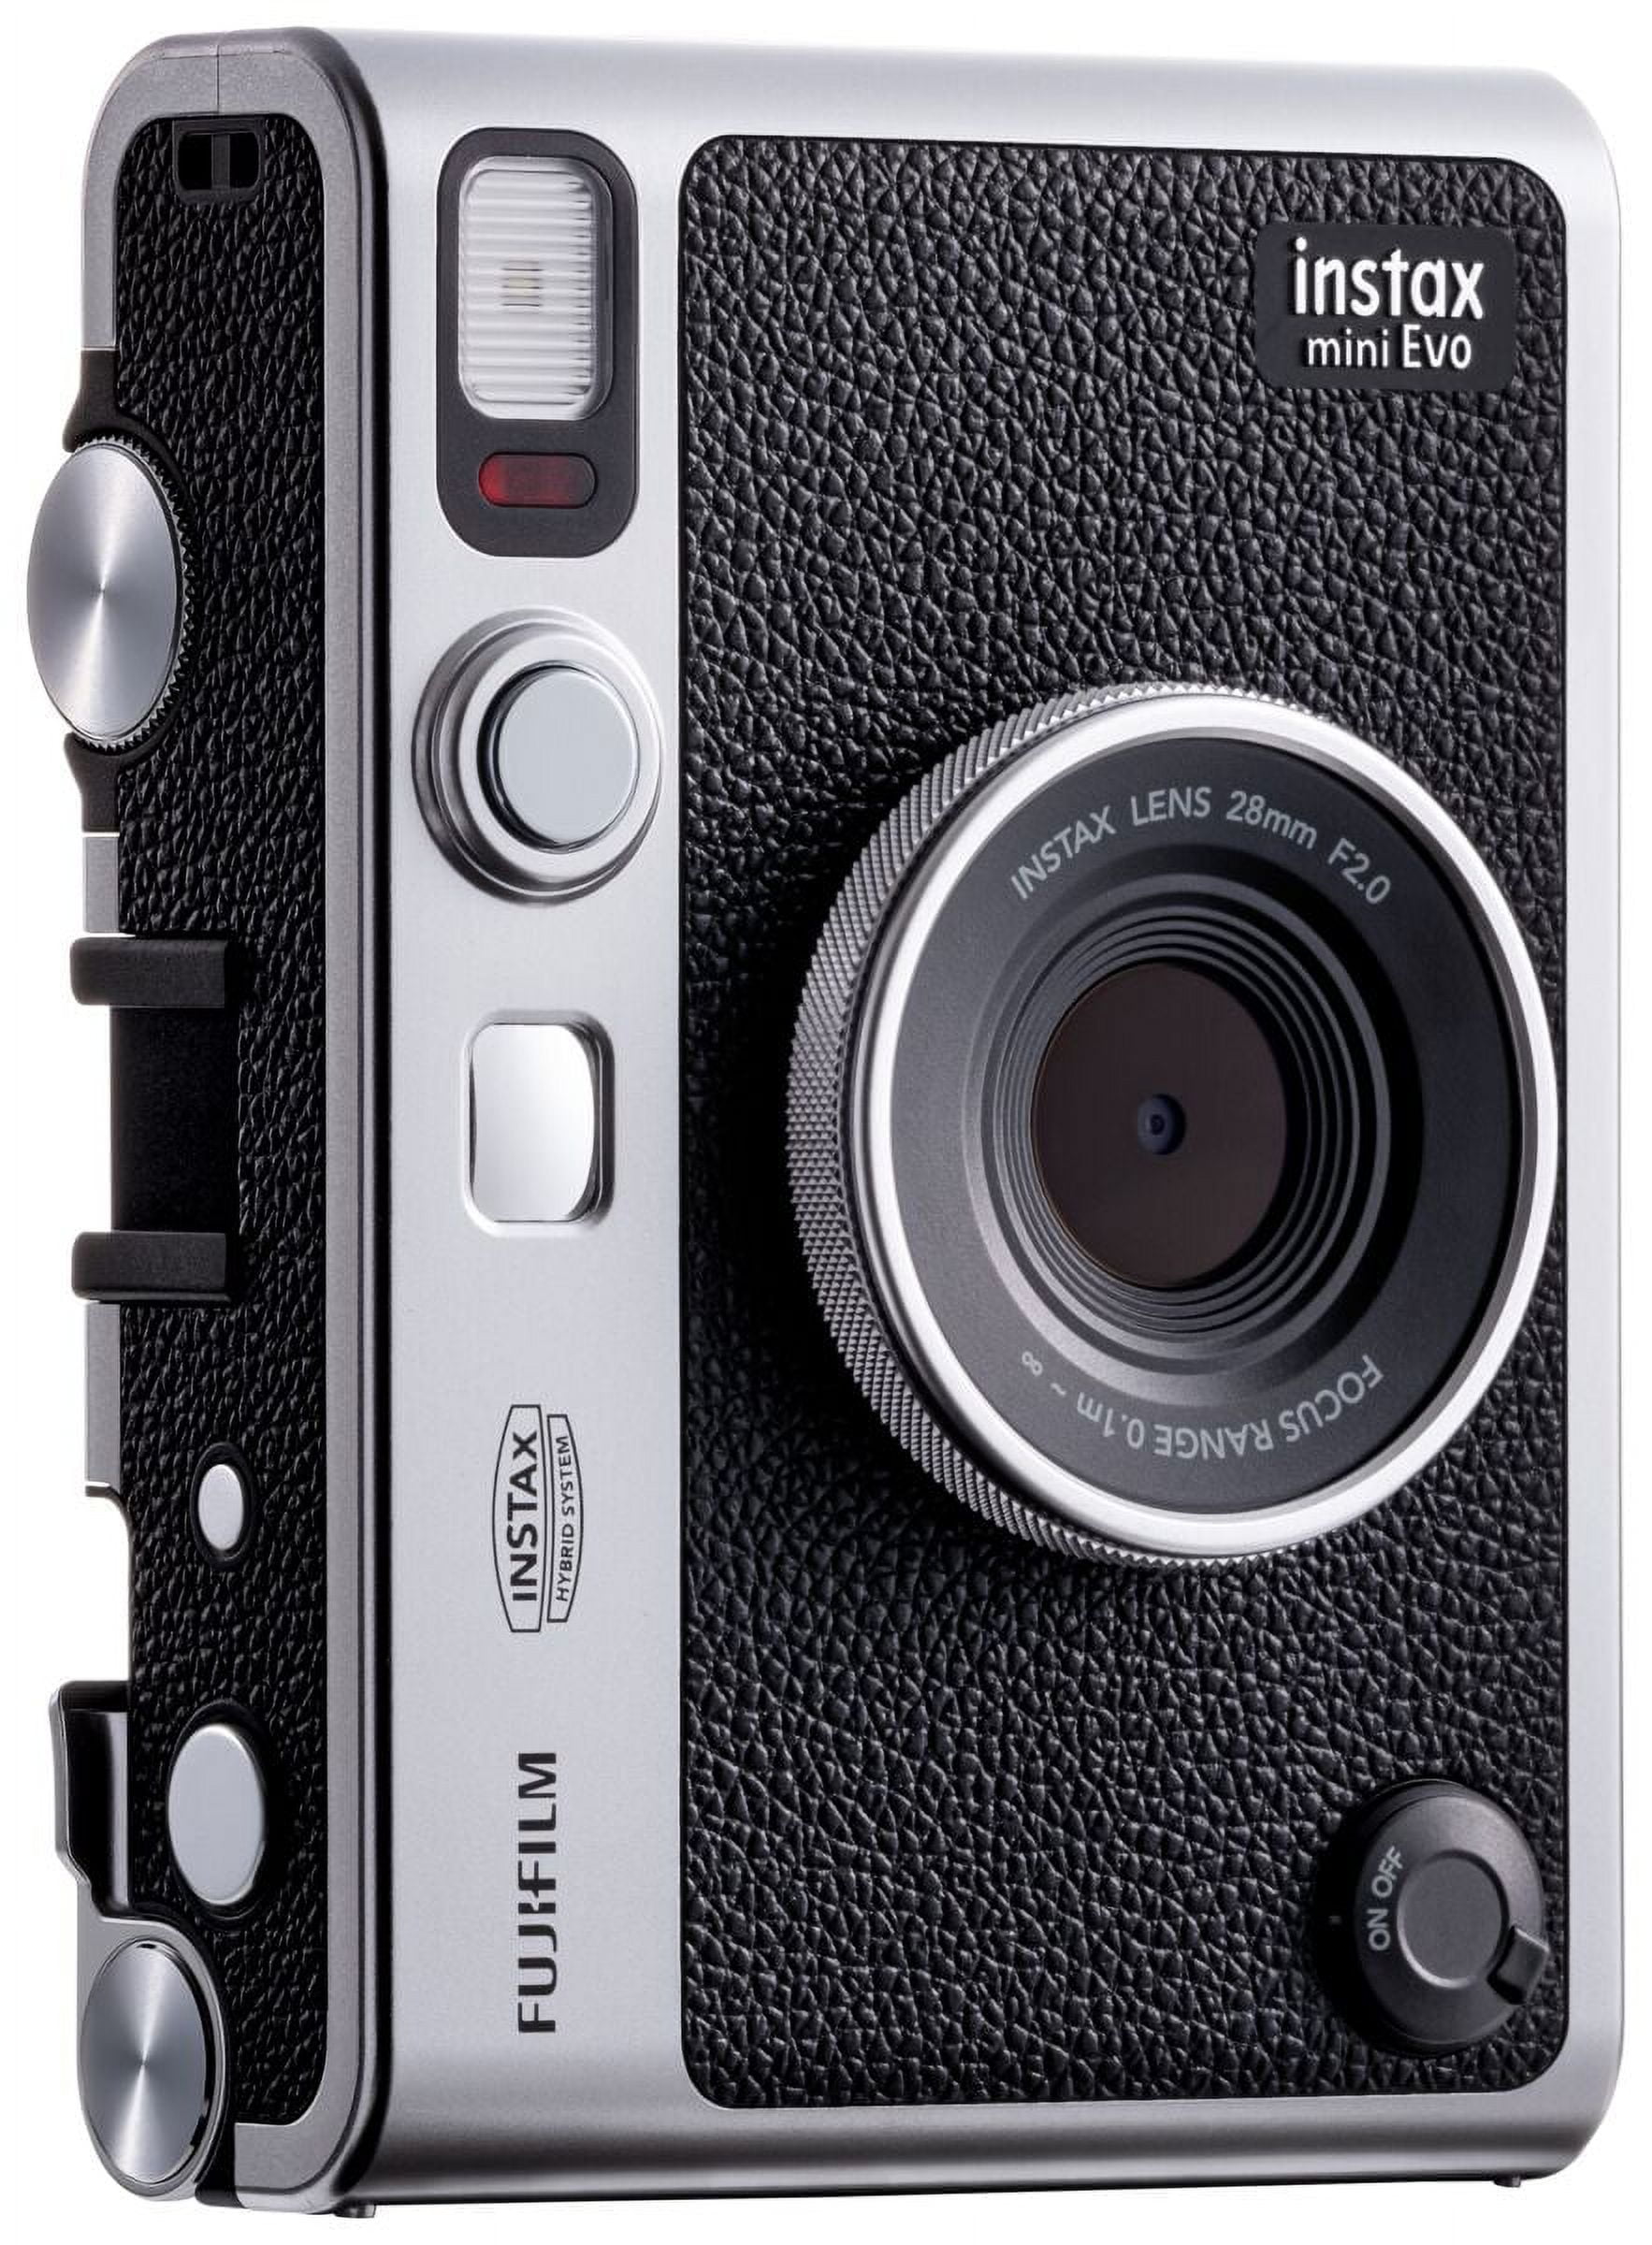 Fuji Instax Mini Evo Hybrid Instant Camera C-Type Black